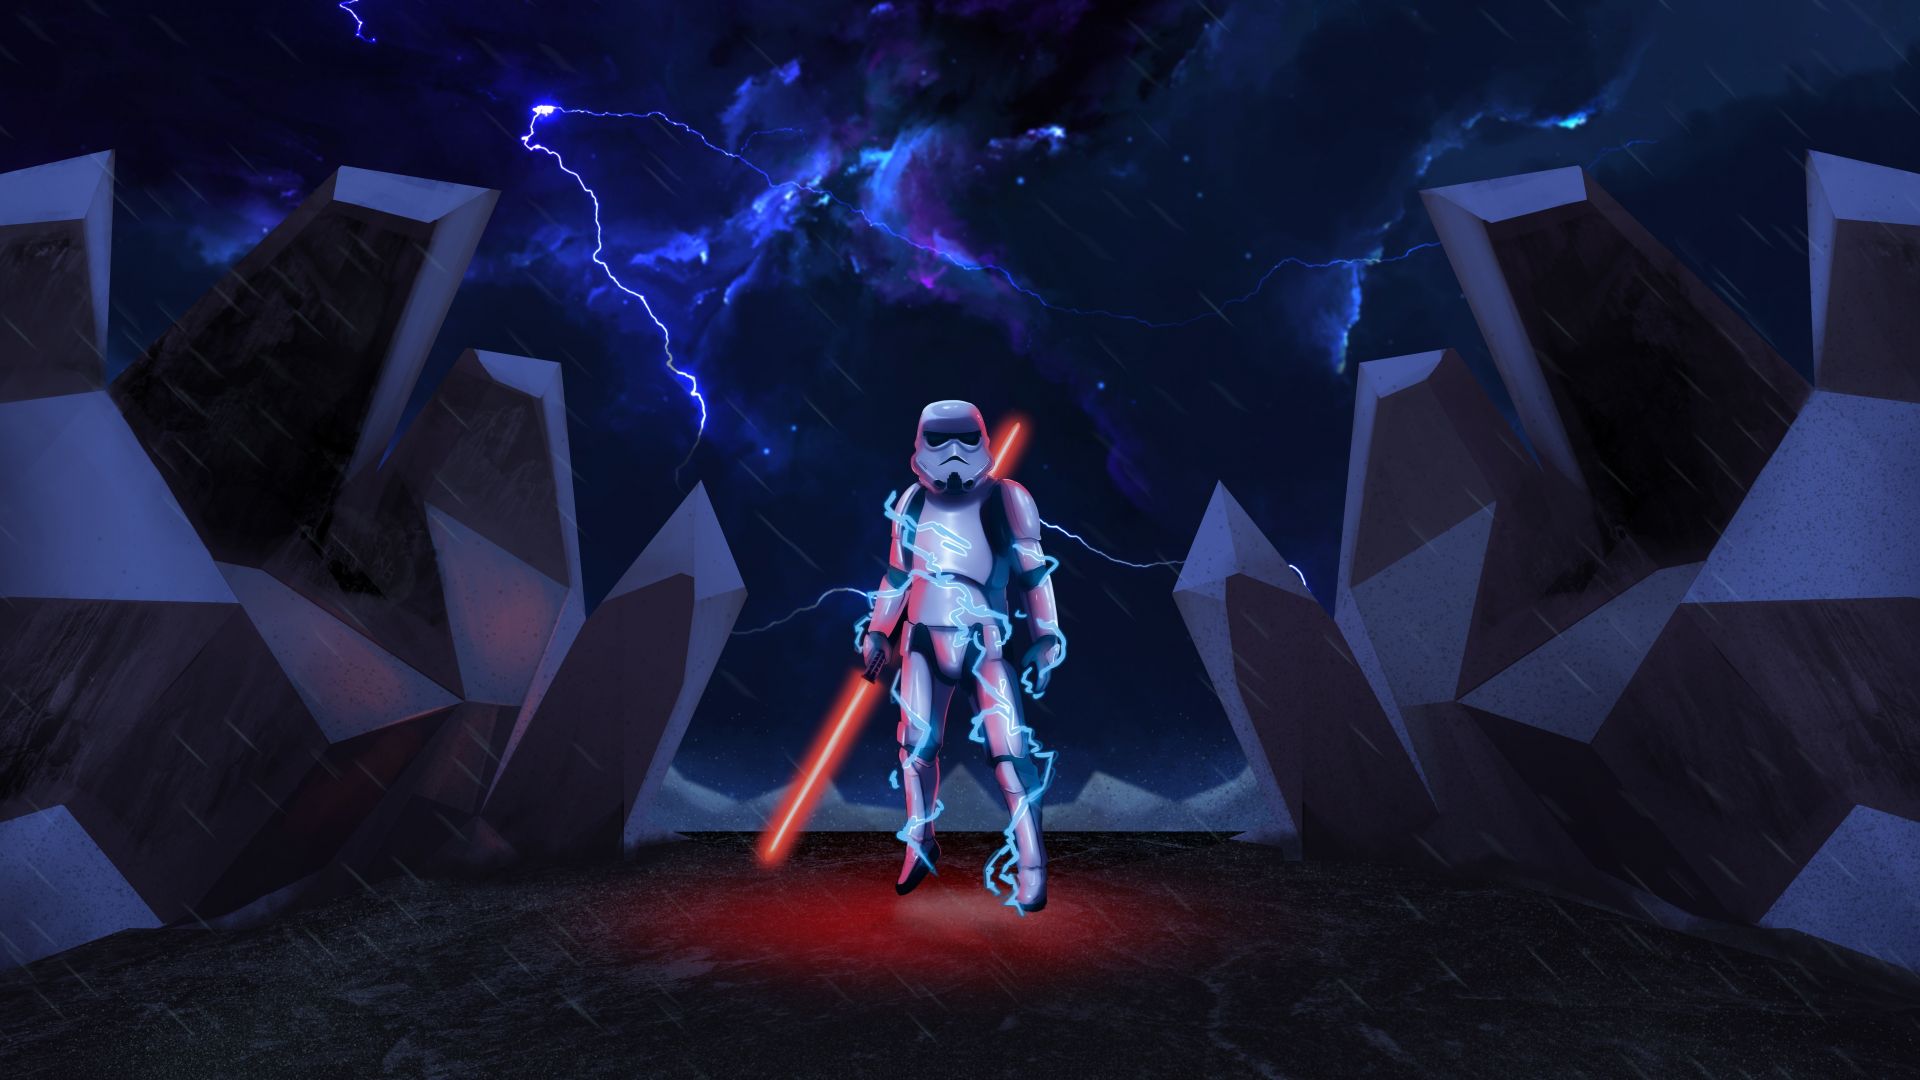 Stormtrooper HD Wallpaper Image Background